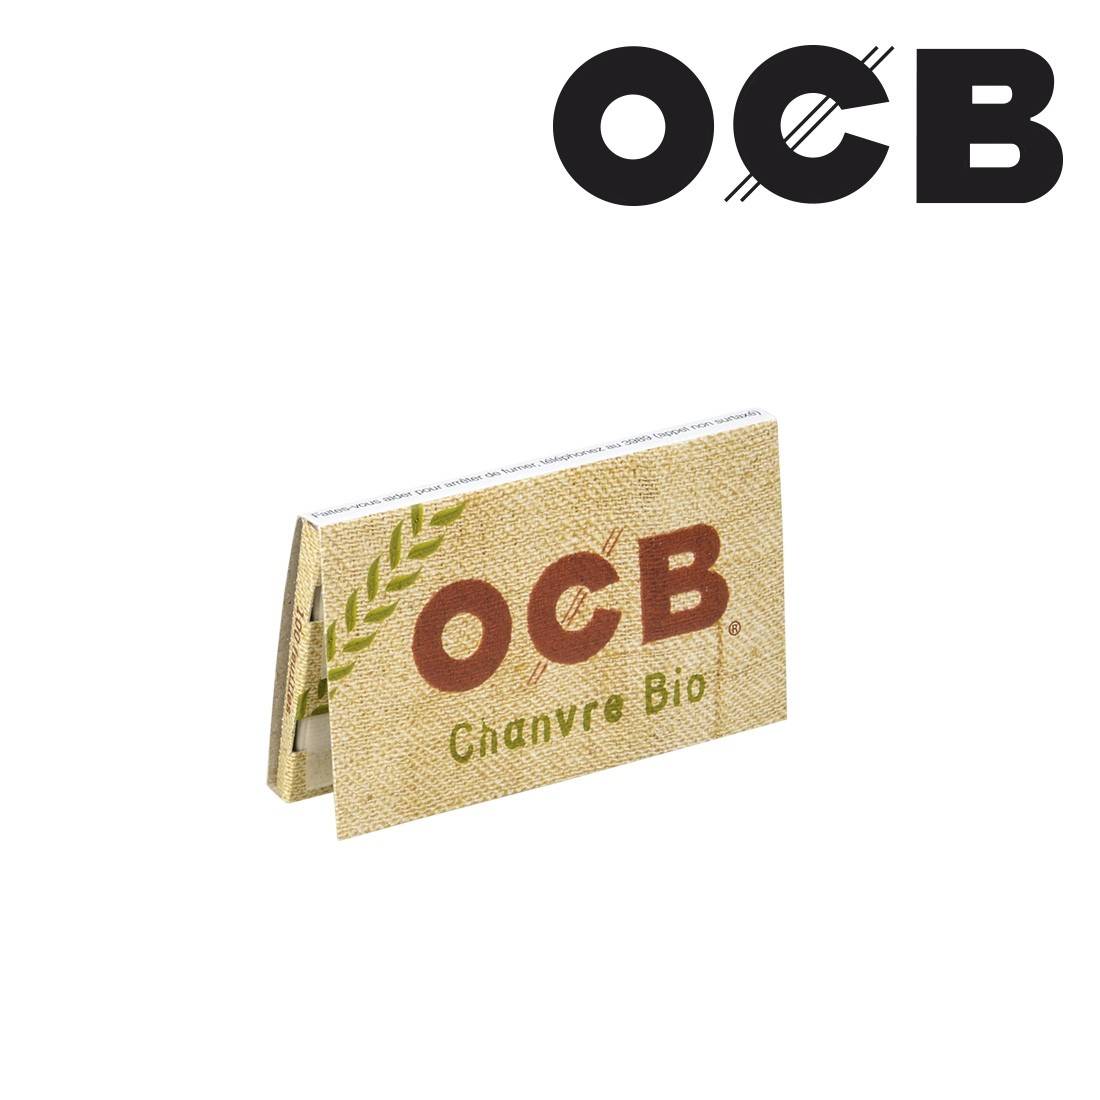 Boite de Petite Feuille à rouler OCB © Chanvre Bio Regular